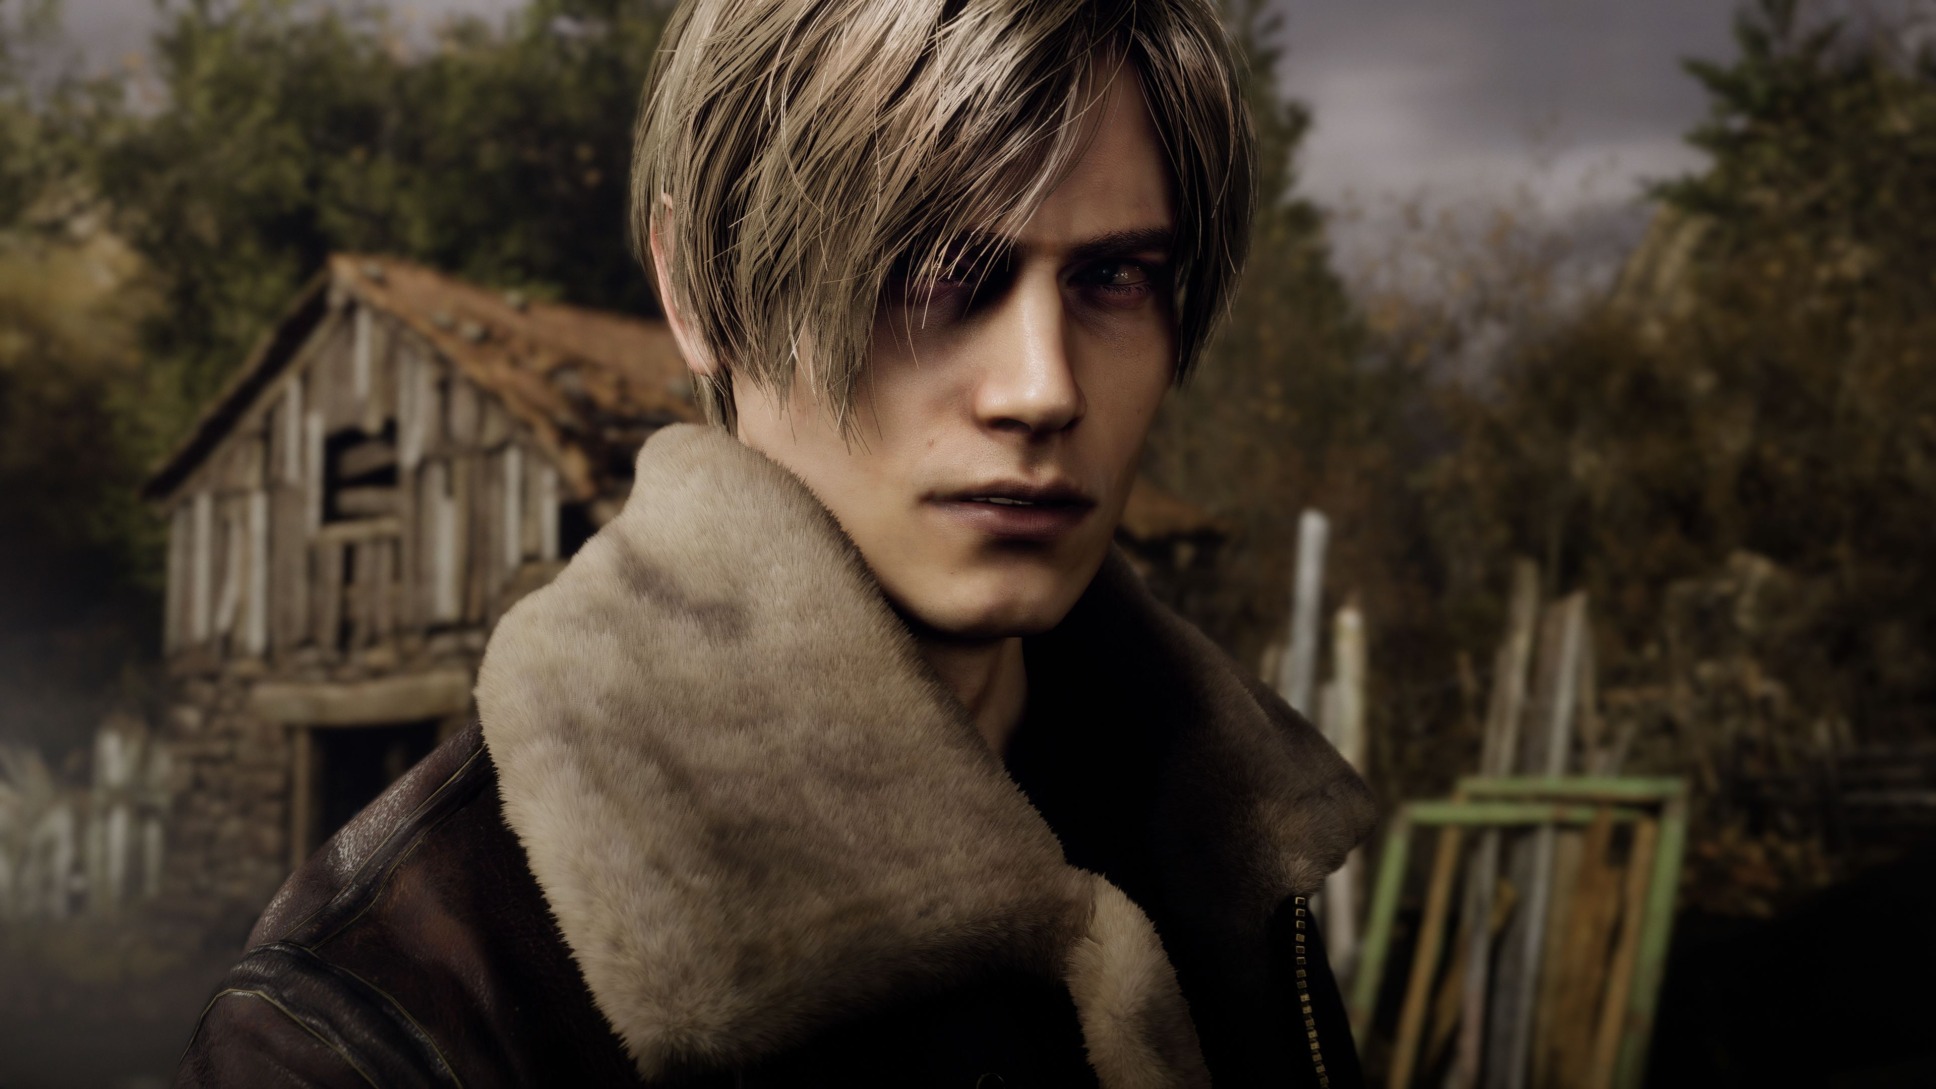 Resident Evil 4 Remake Nods To Darkside Chronicles With Krauser Art